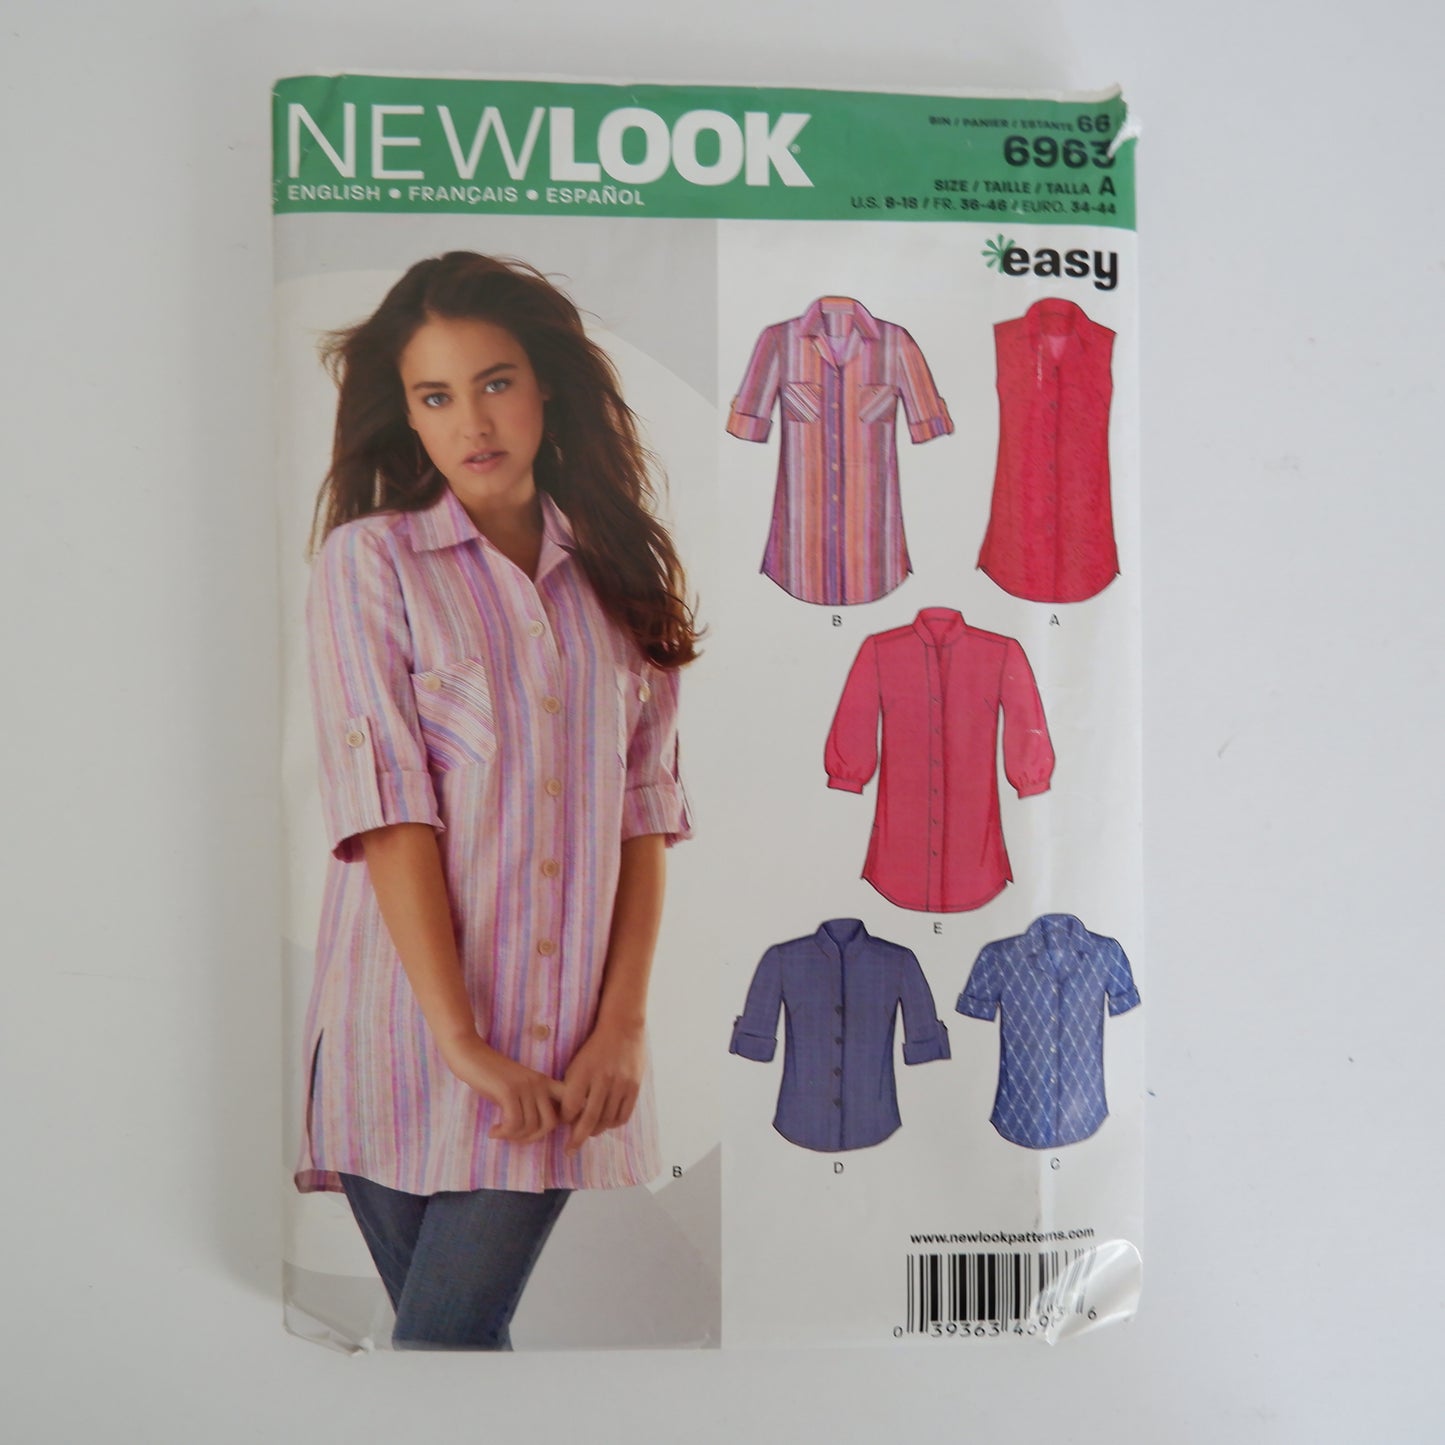 New Look 6963, Shirt pattern, Sizes 8 - 18